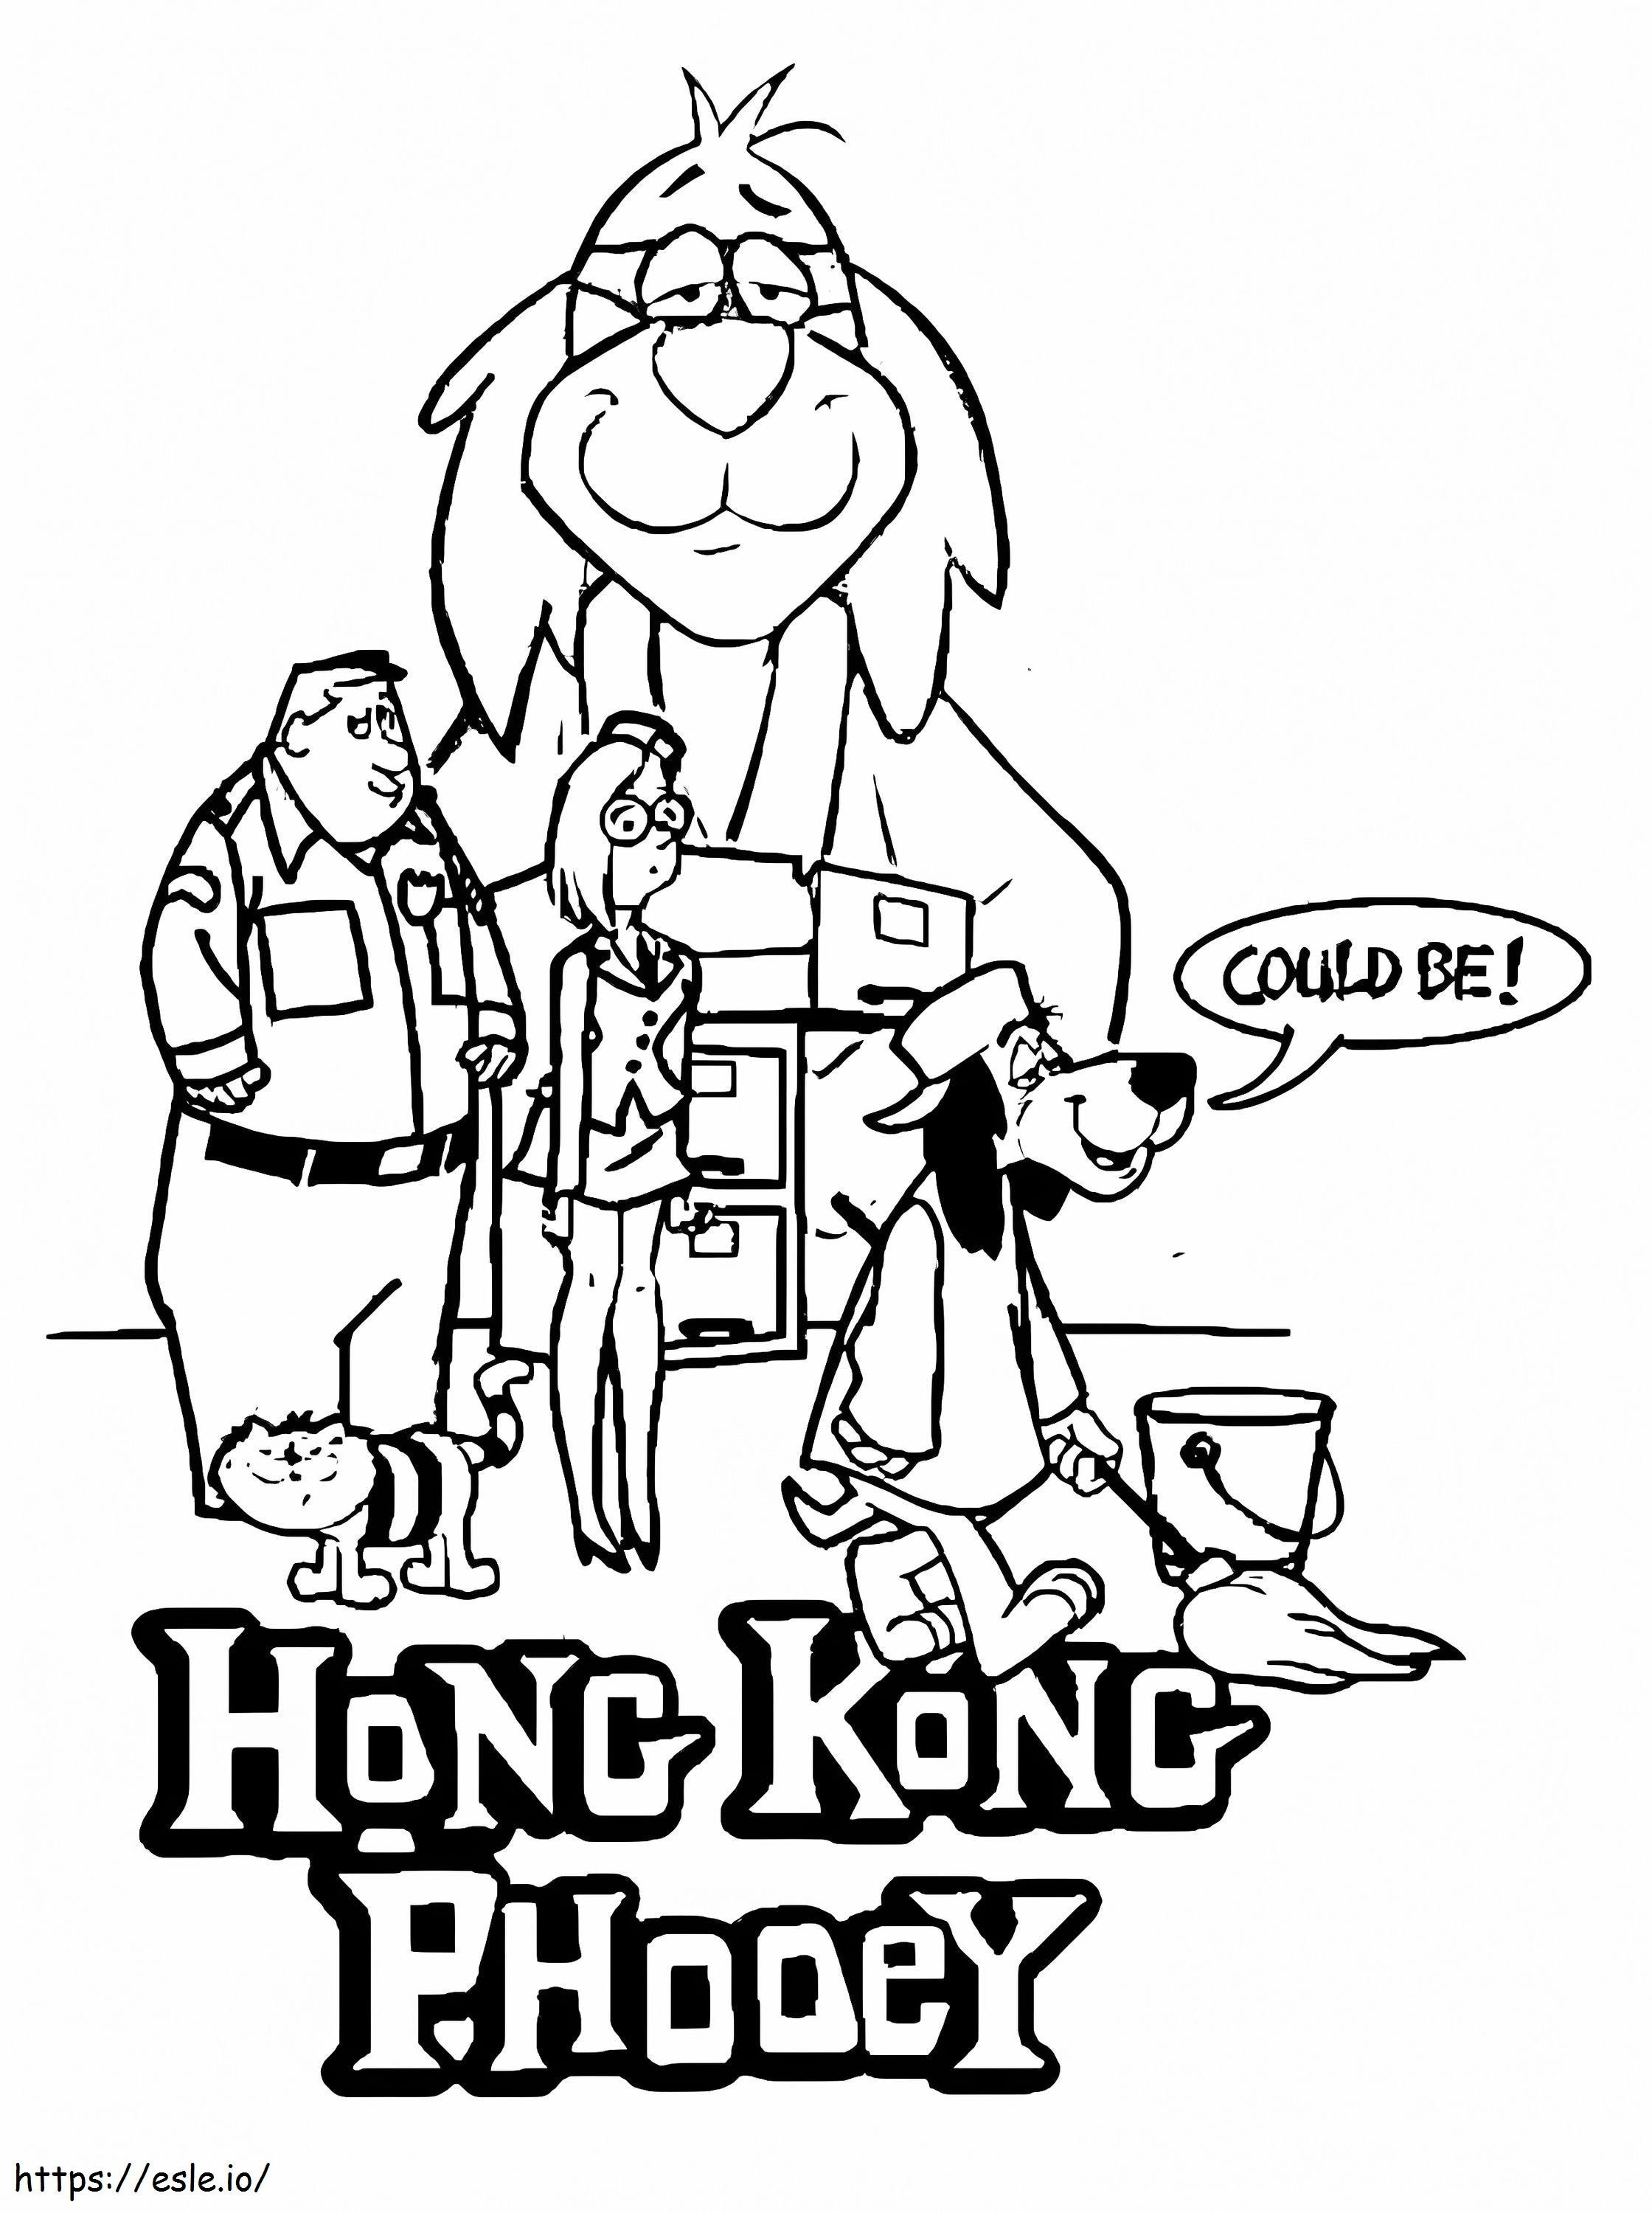 Personajes de Hong Kong Phooey para colorear